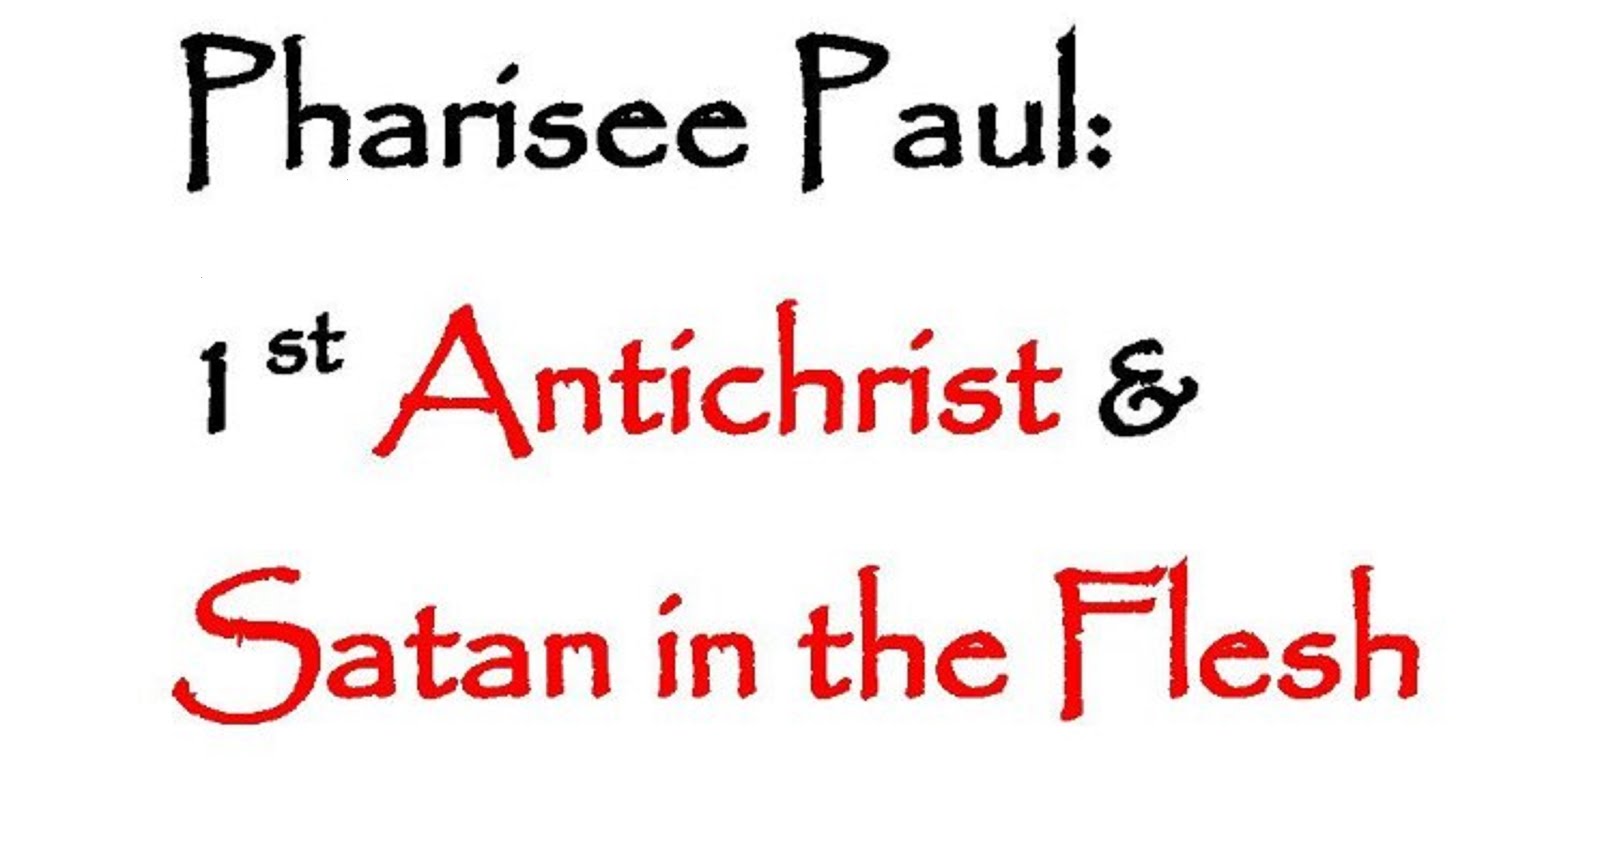 PHARISEE PAUL 1st ANTICHRIST AND SATAN IN THE FLESH